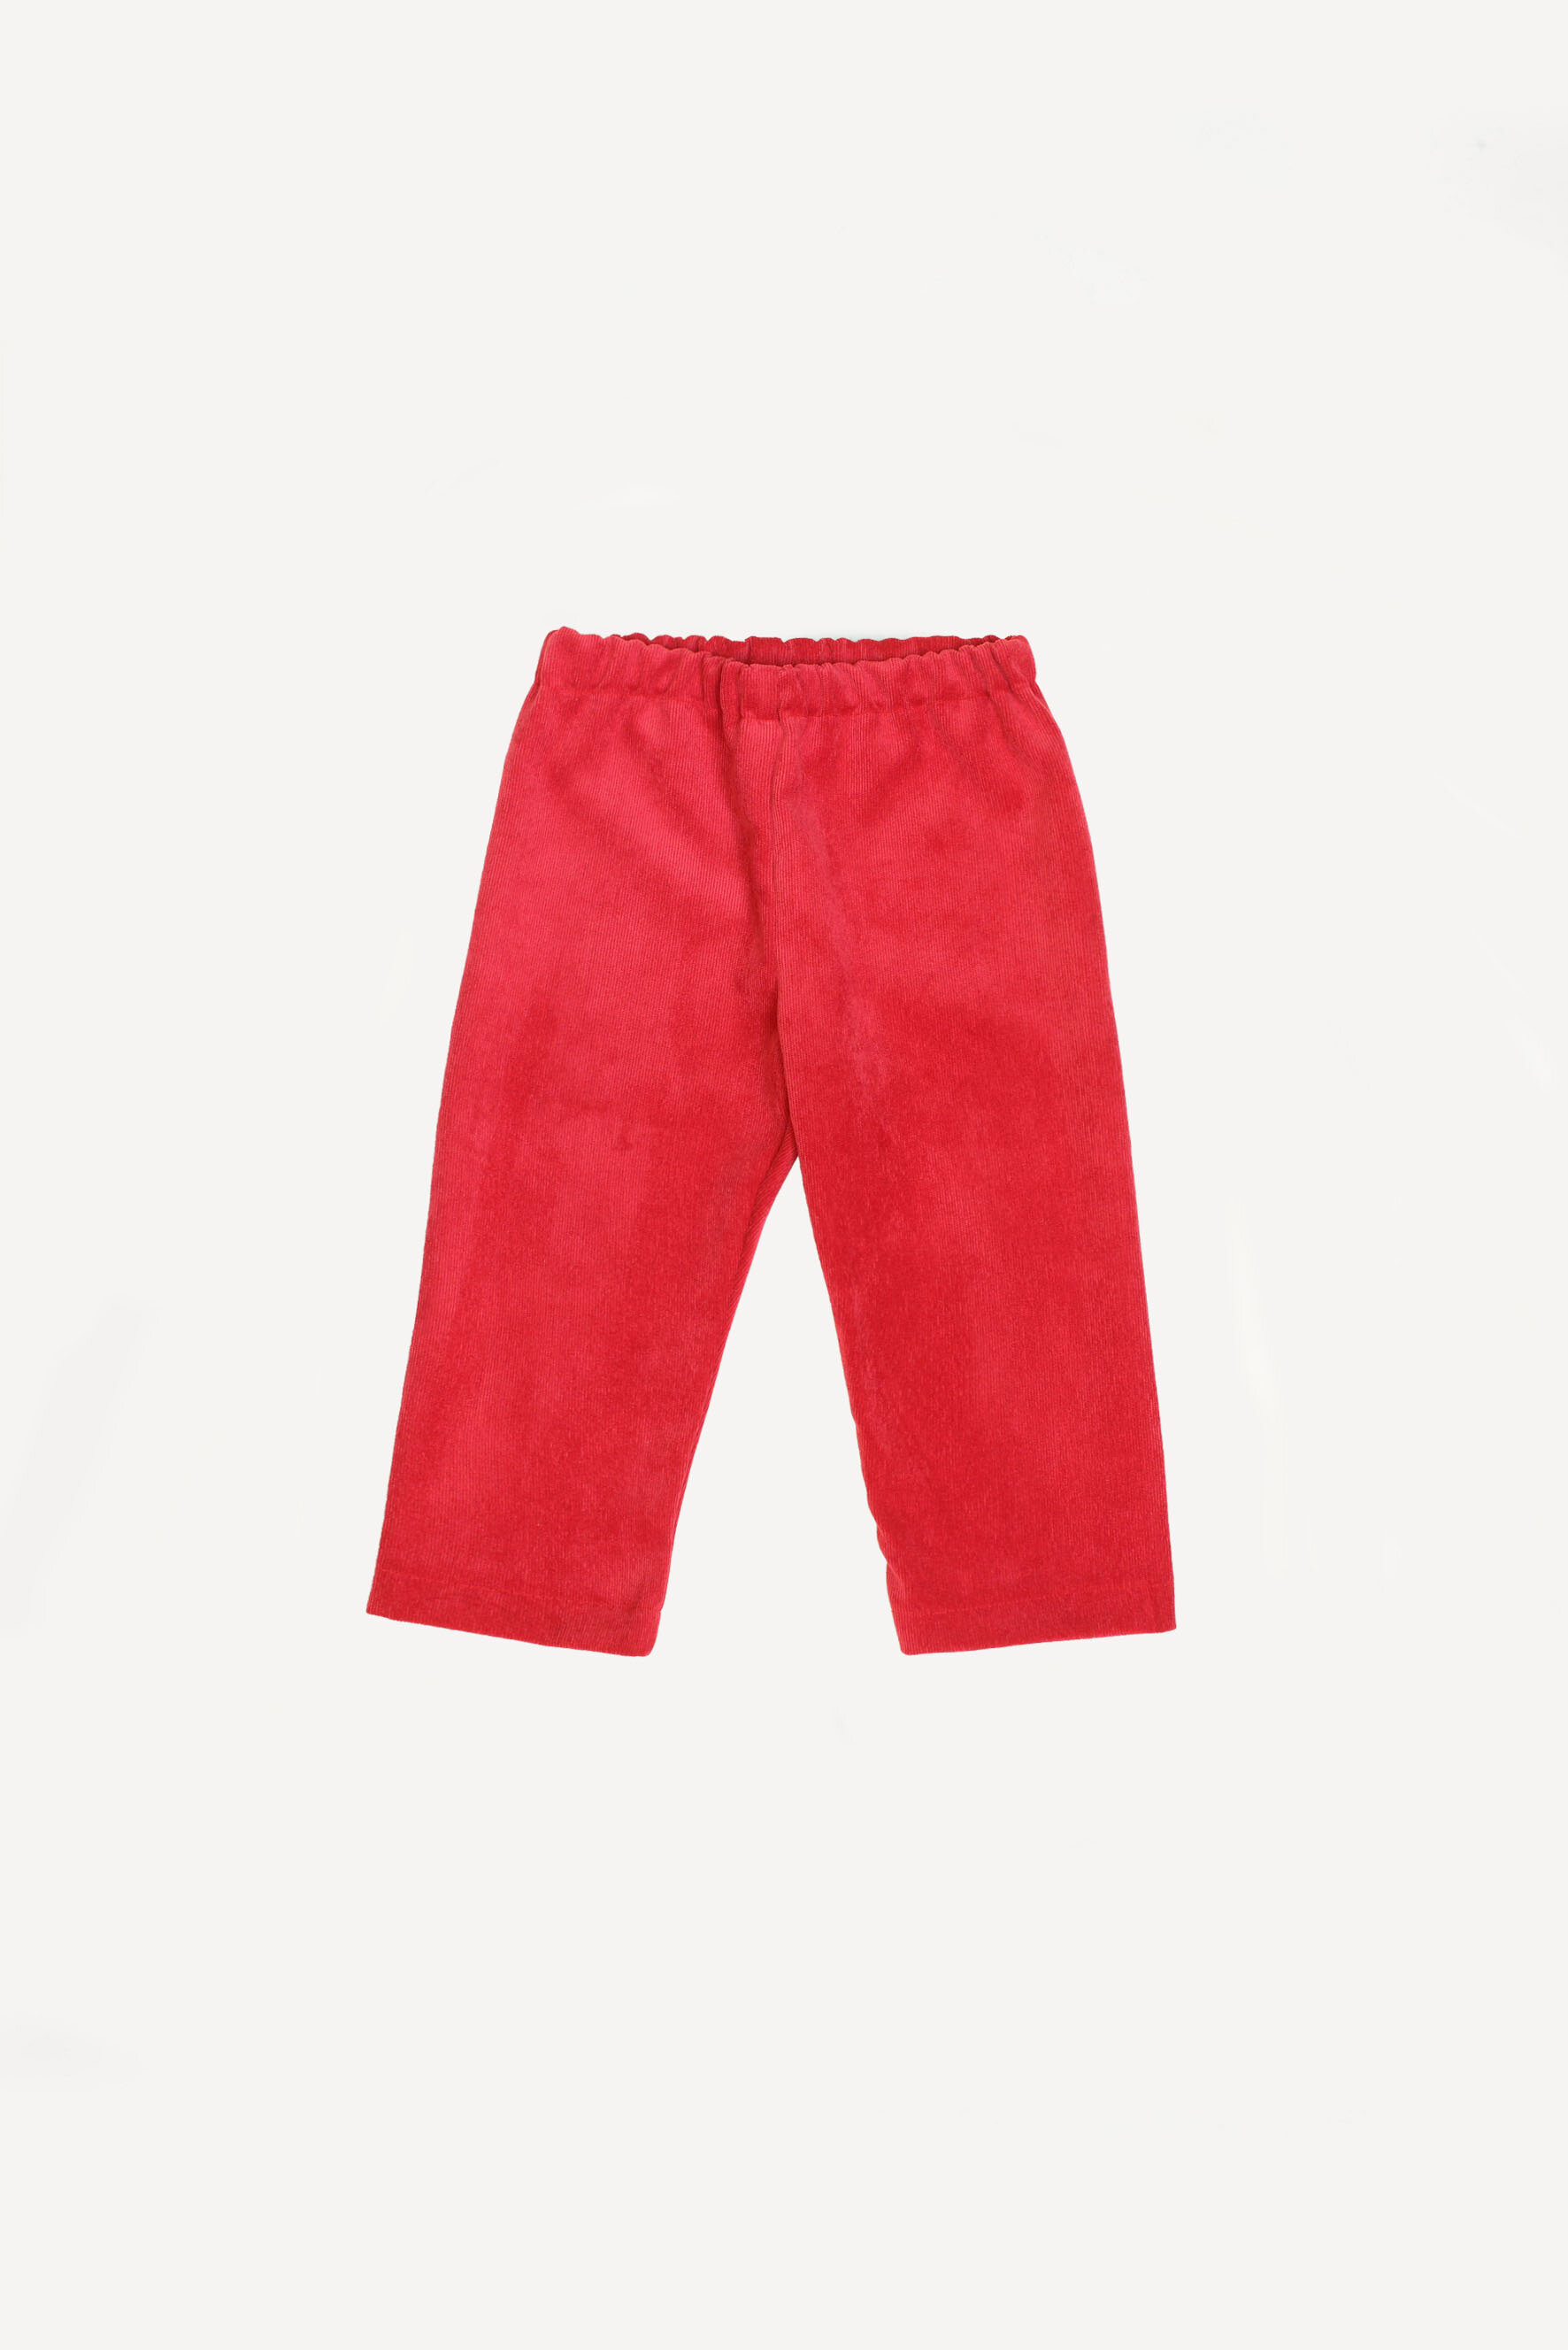 Pantaloni unisex in velluto rosso vermiglio